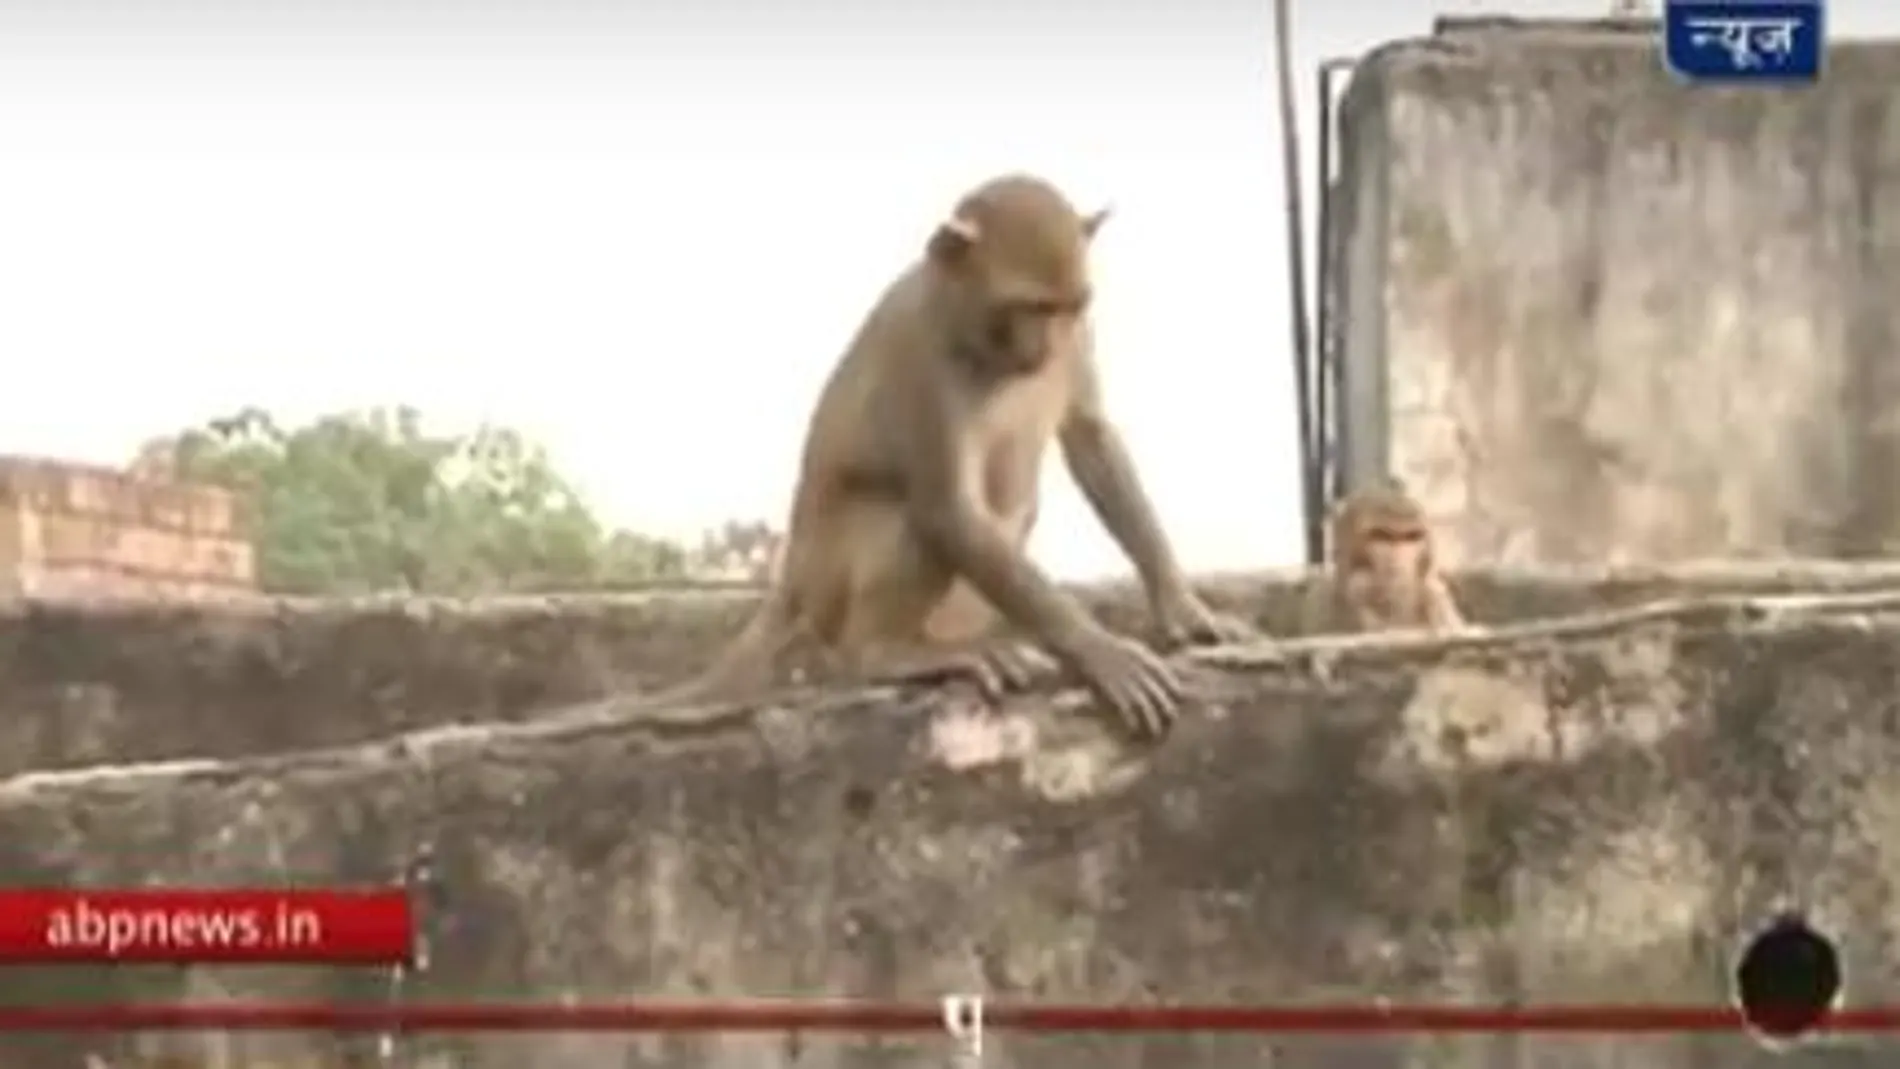 Un grupo de monos «asesinos» provocan el pánico en India